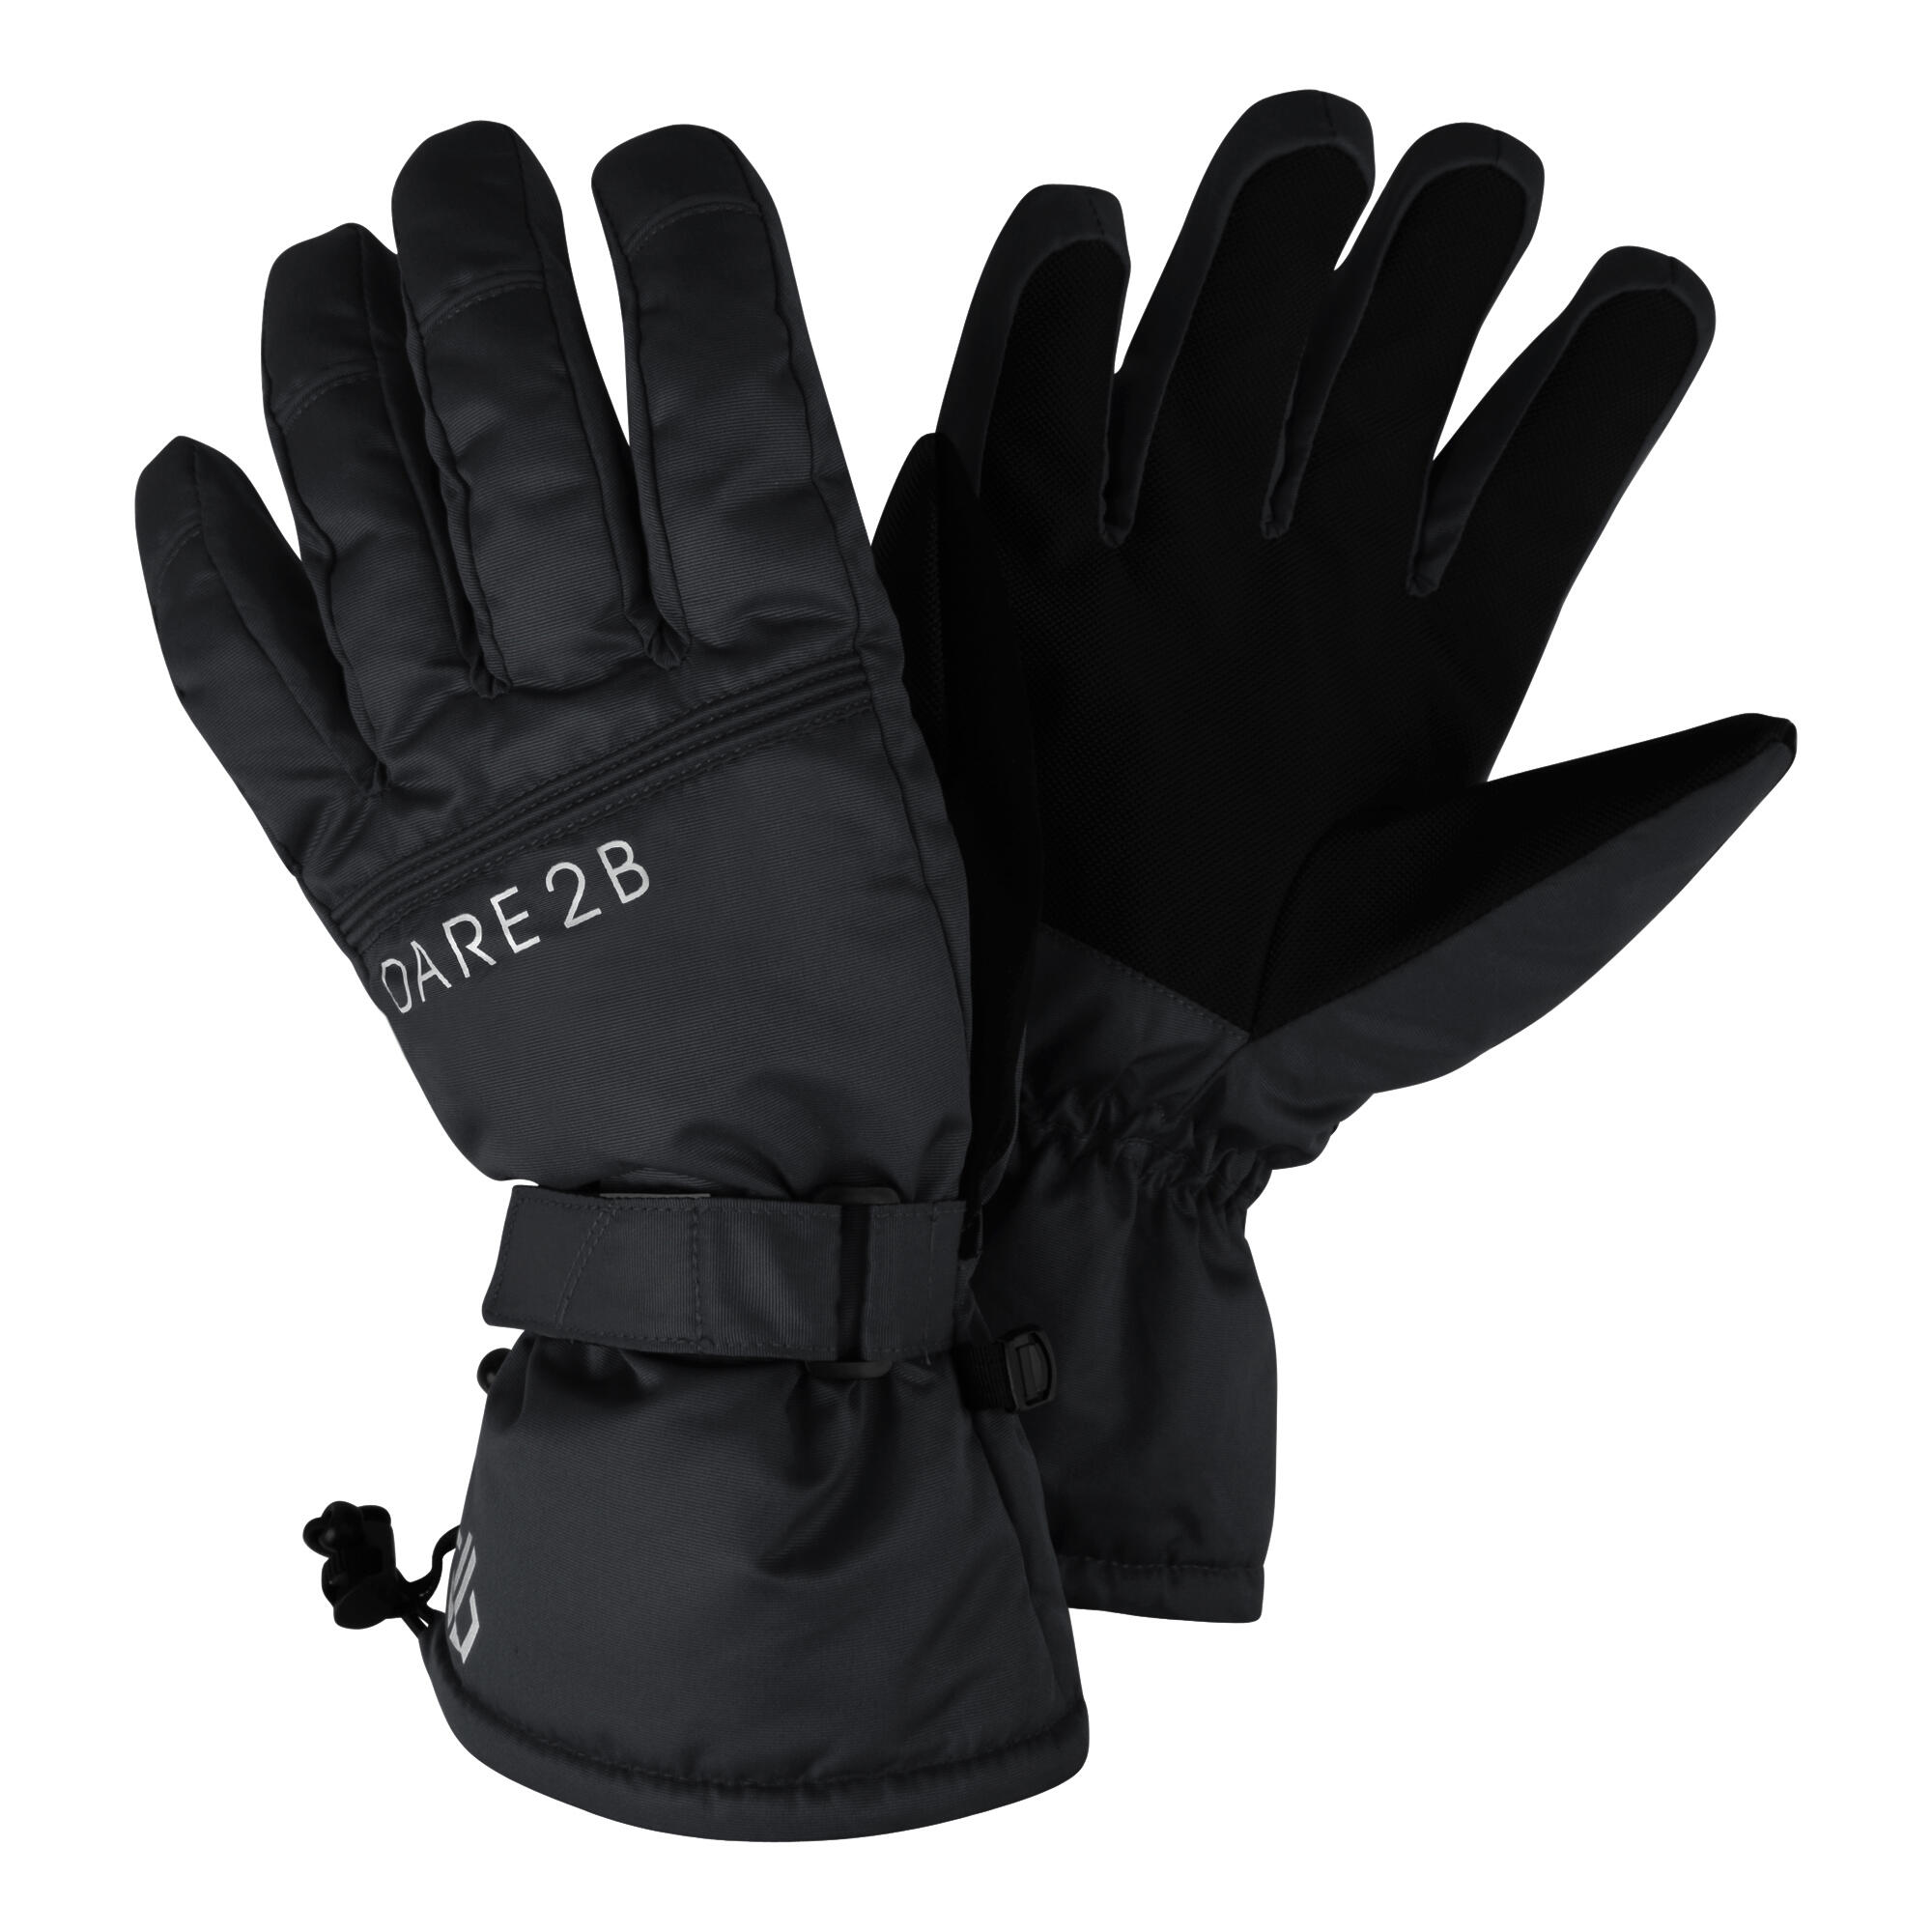 Decathlon gloves MEN FASHION Accessories discount 75% Black Single 